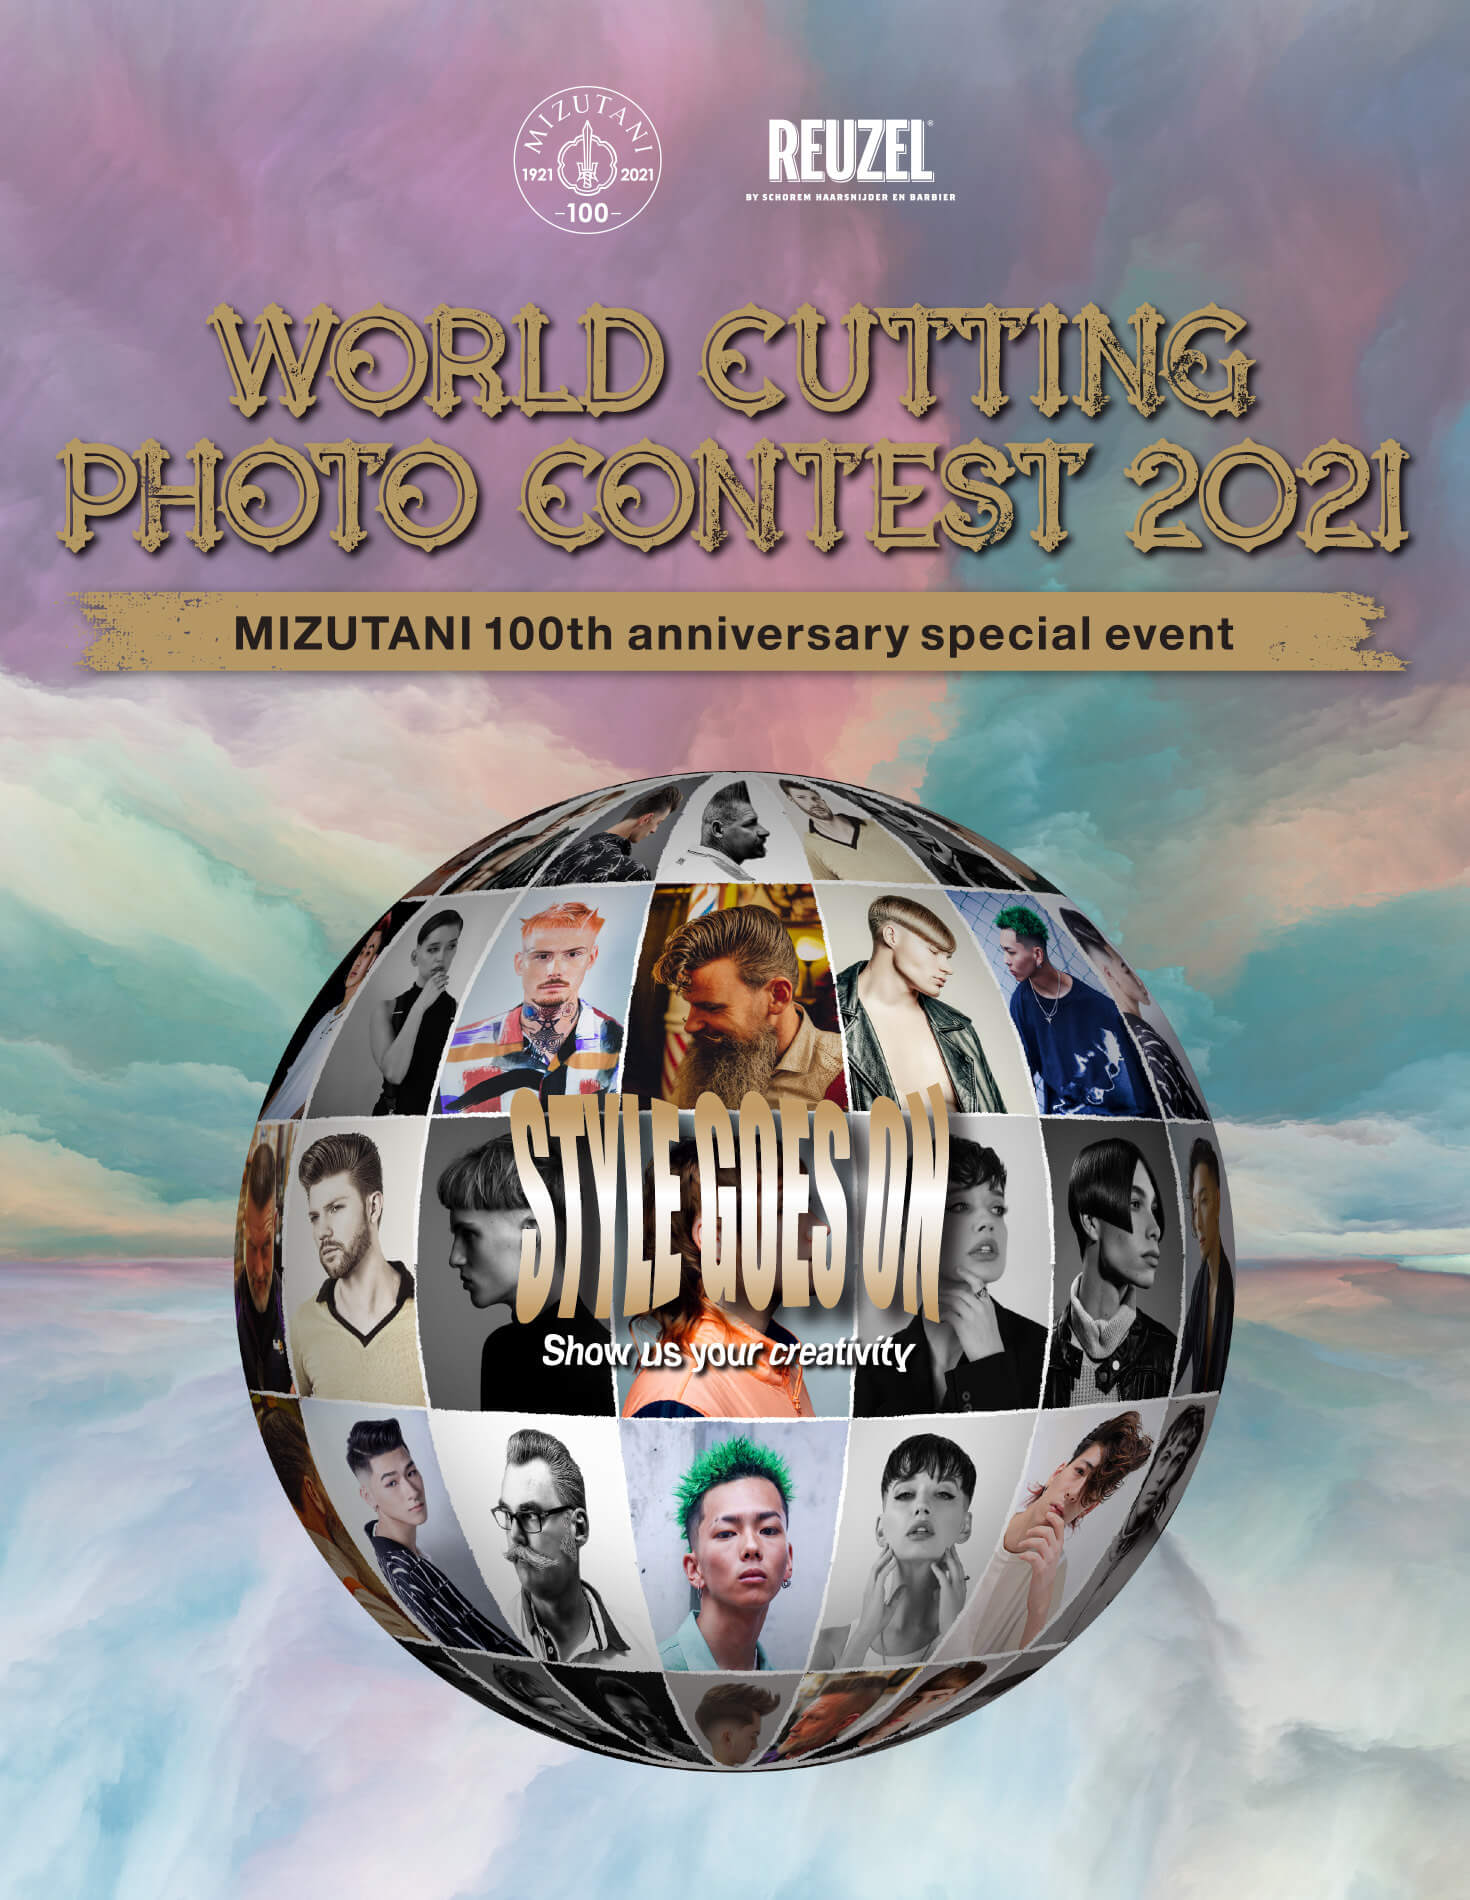 WORLD CUTTING PHOTO CONTEST 2021